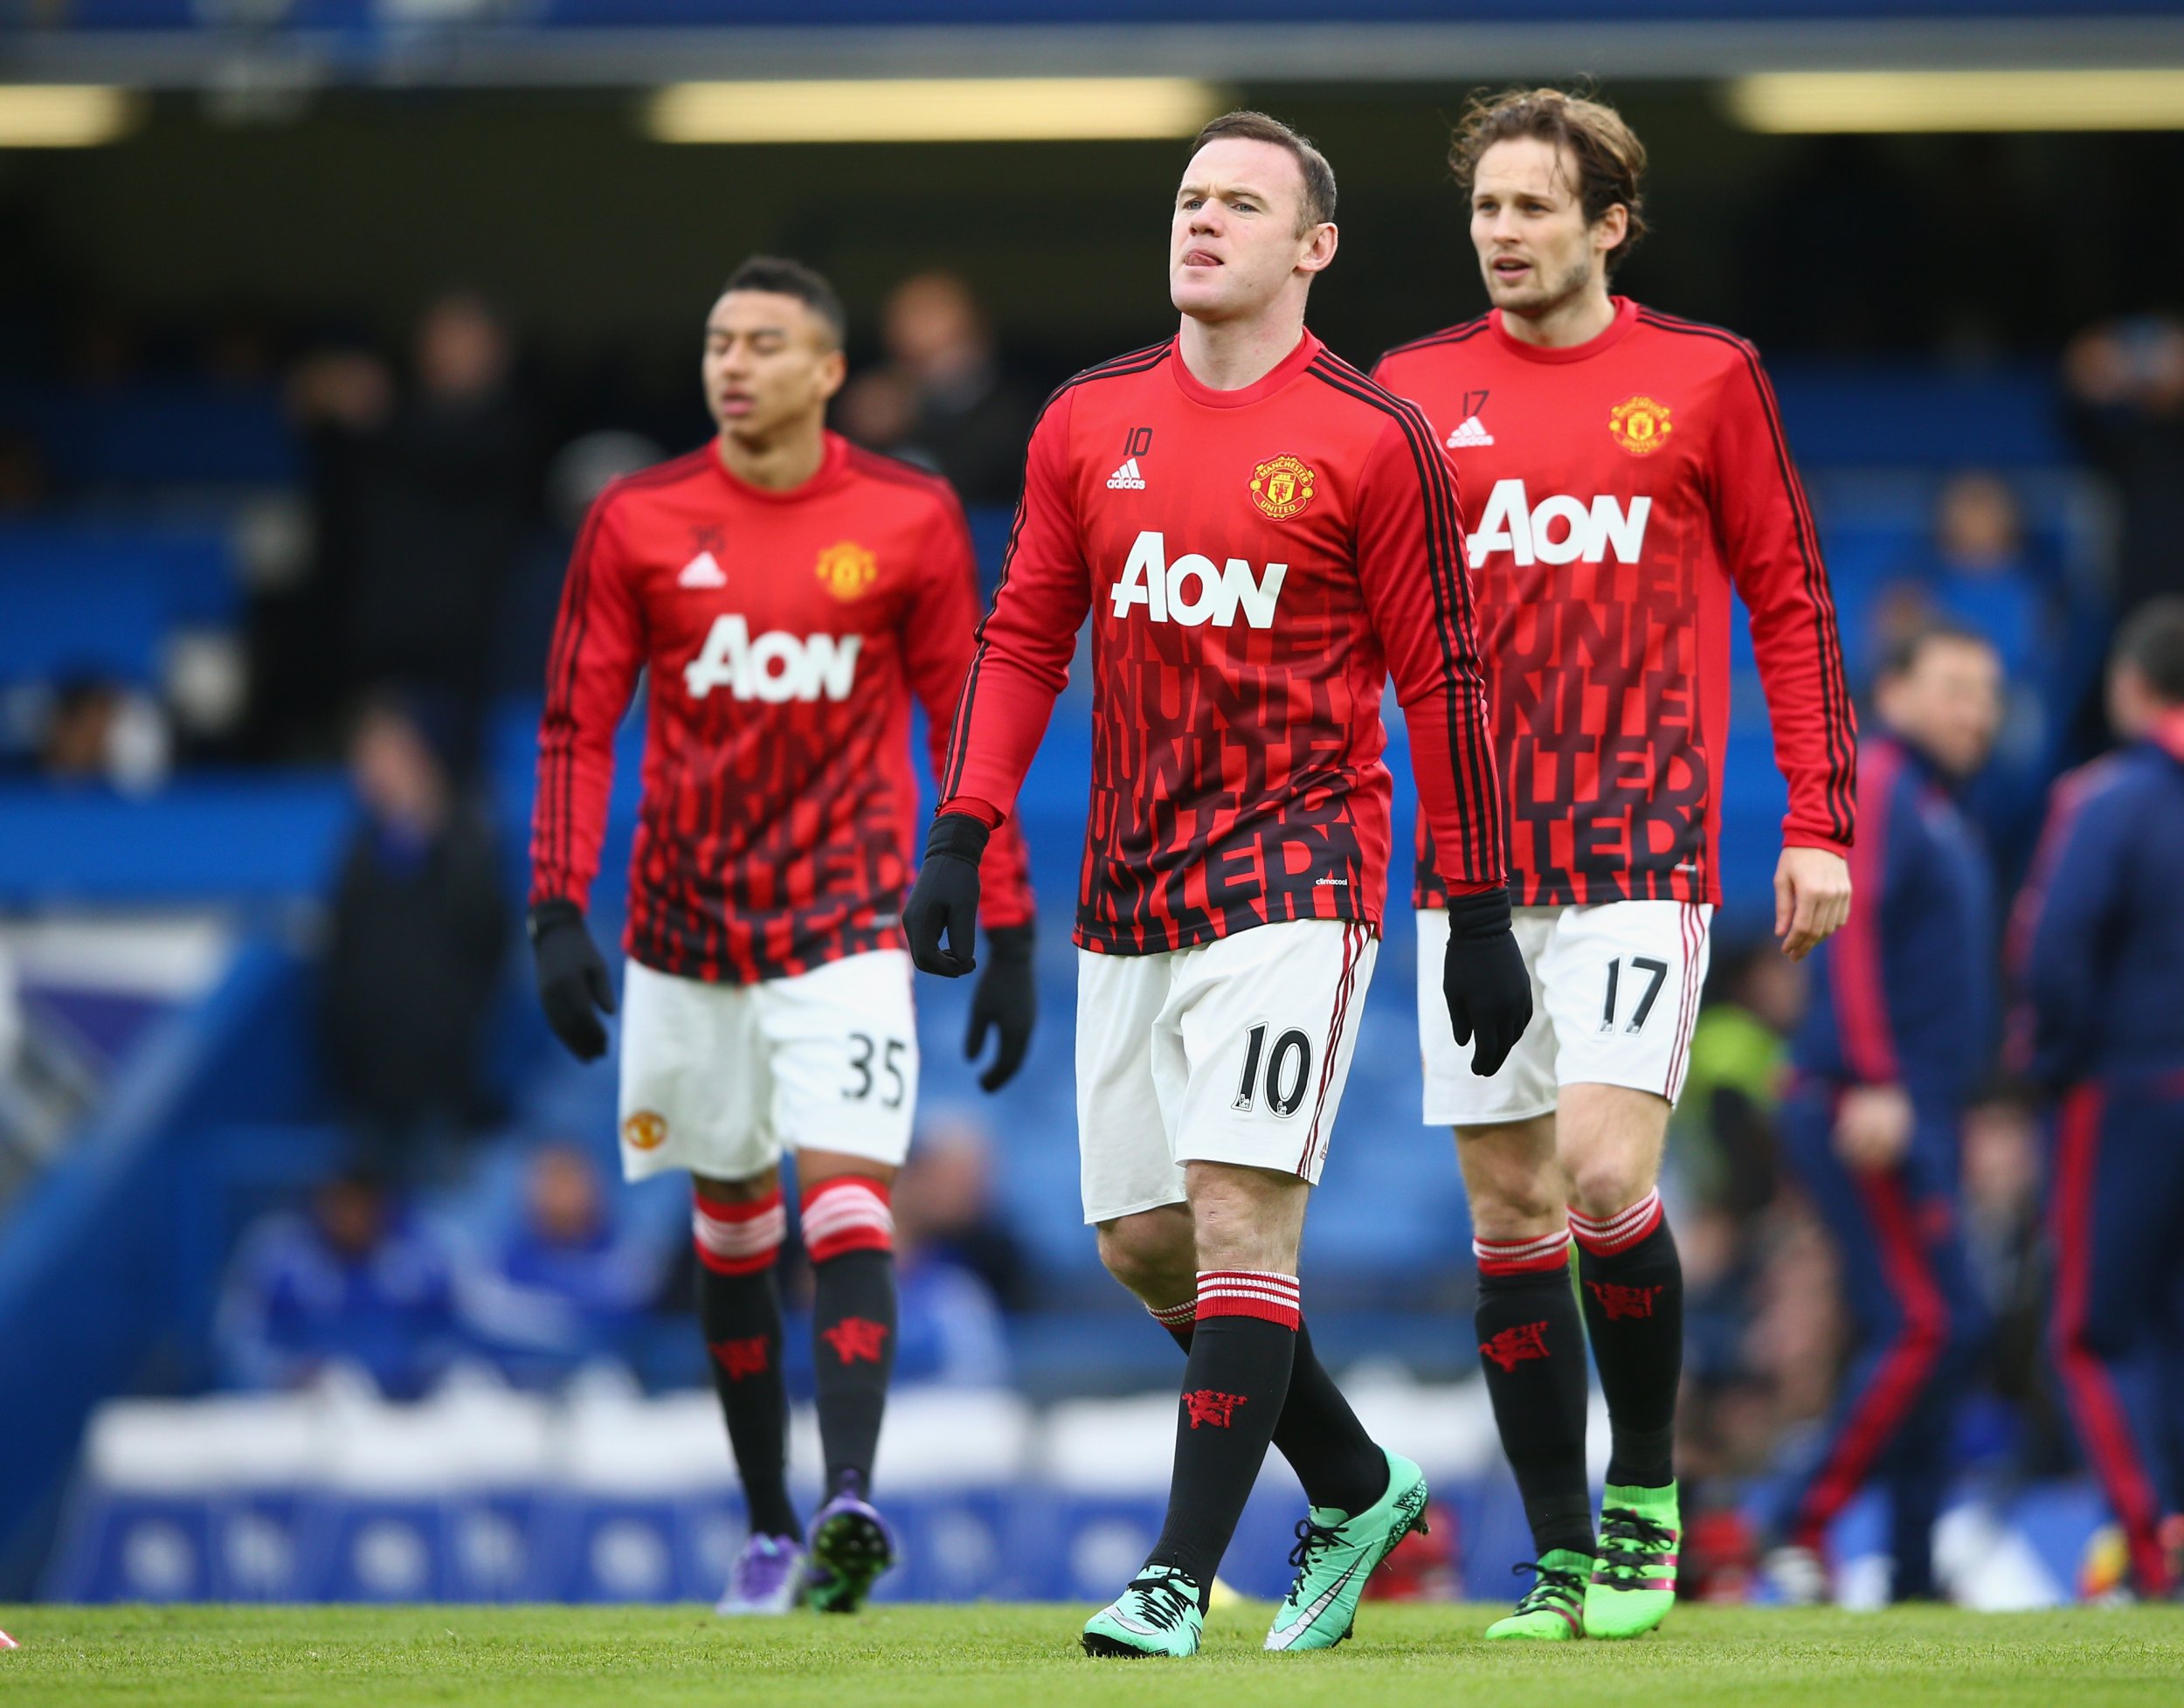 Manchester United captain Wayne Rooney, center, at Stamford Bridge, February 2016.